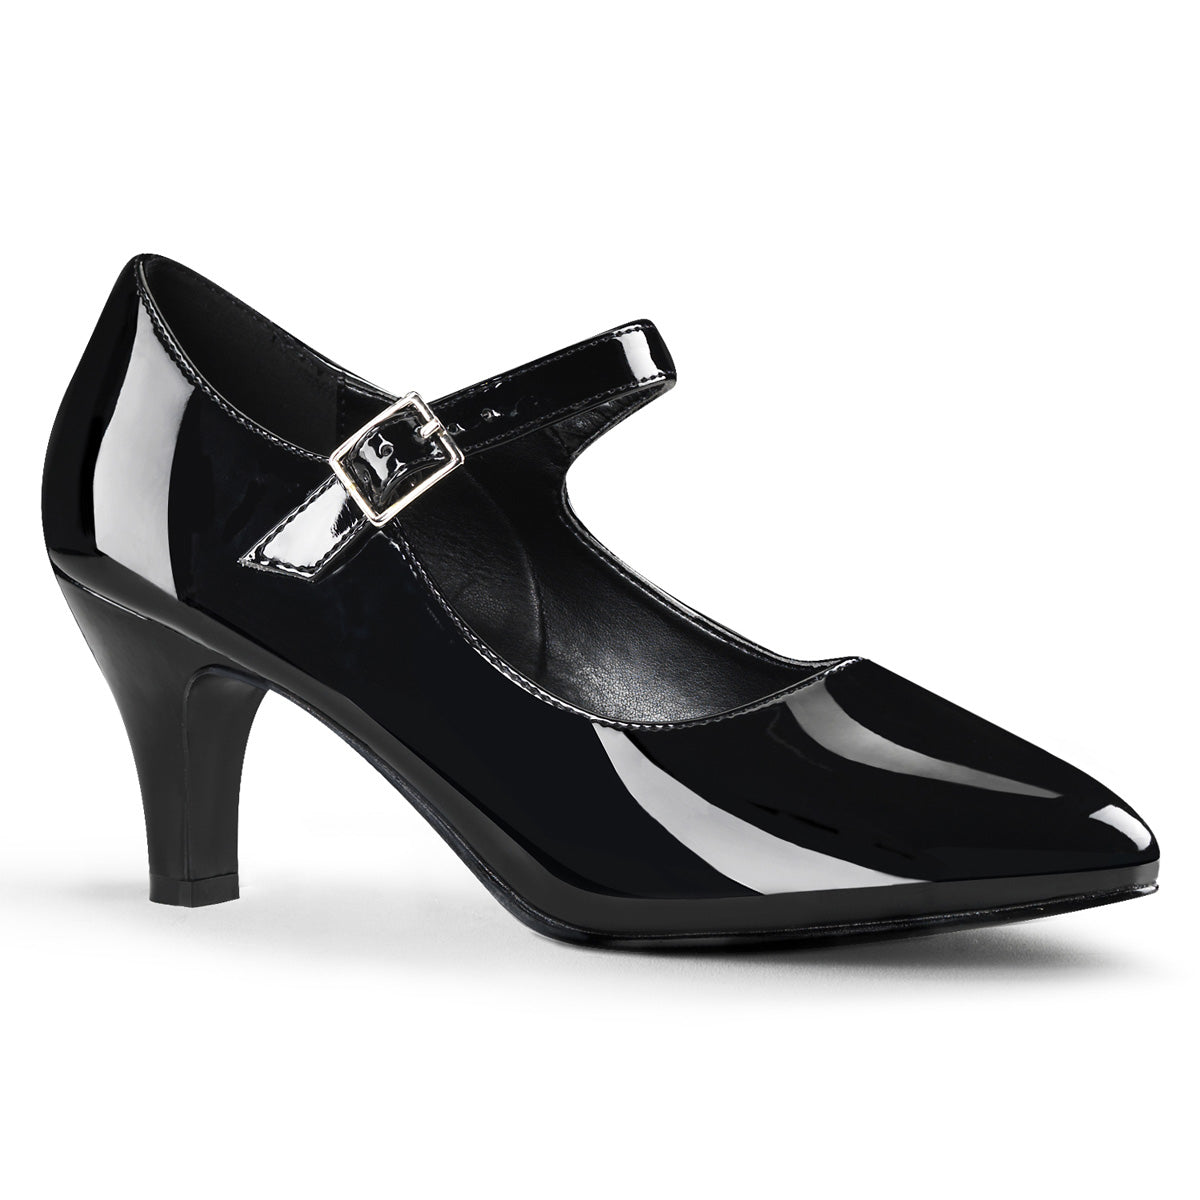 DIVINE-440 Large Size Ladies Shoes 3" Heel Black Patent Fetish Maryjanes